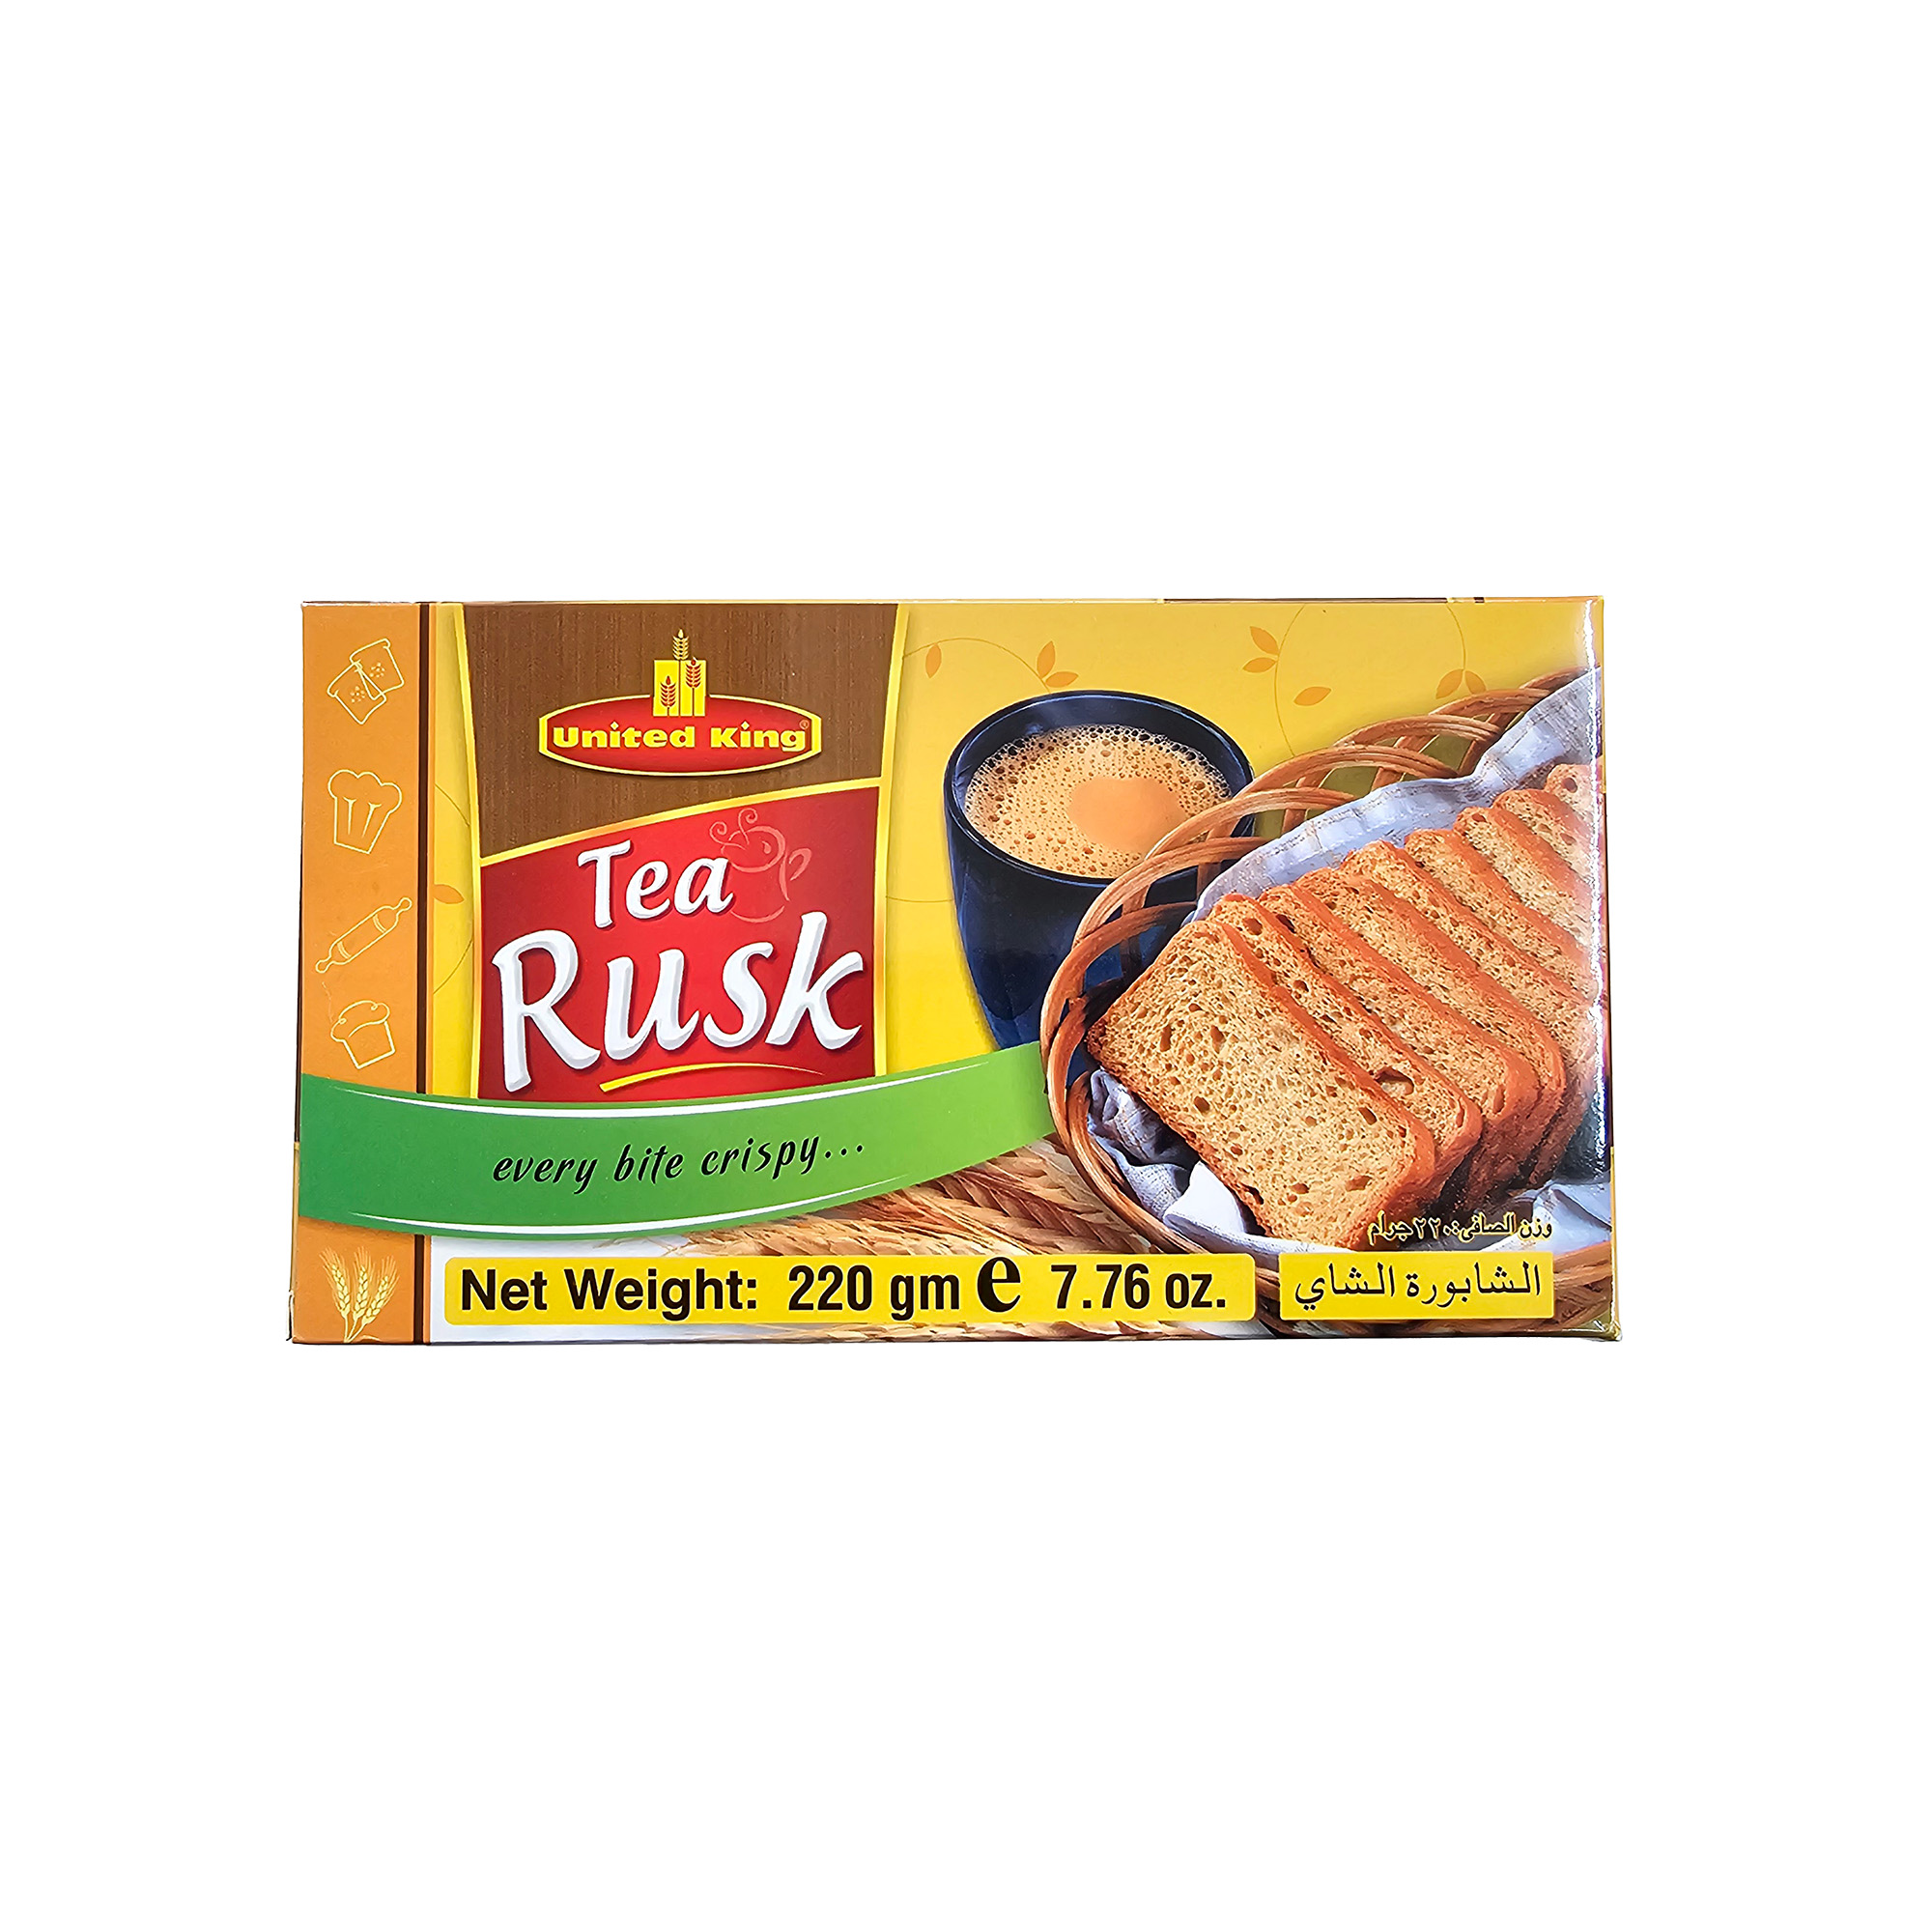 Toast biscuit (Tea Rusk)(United King)